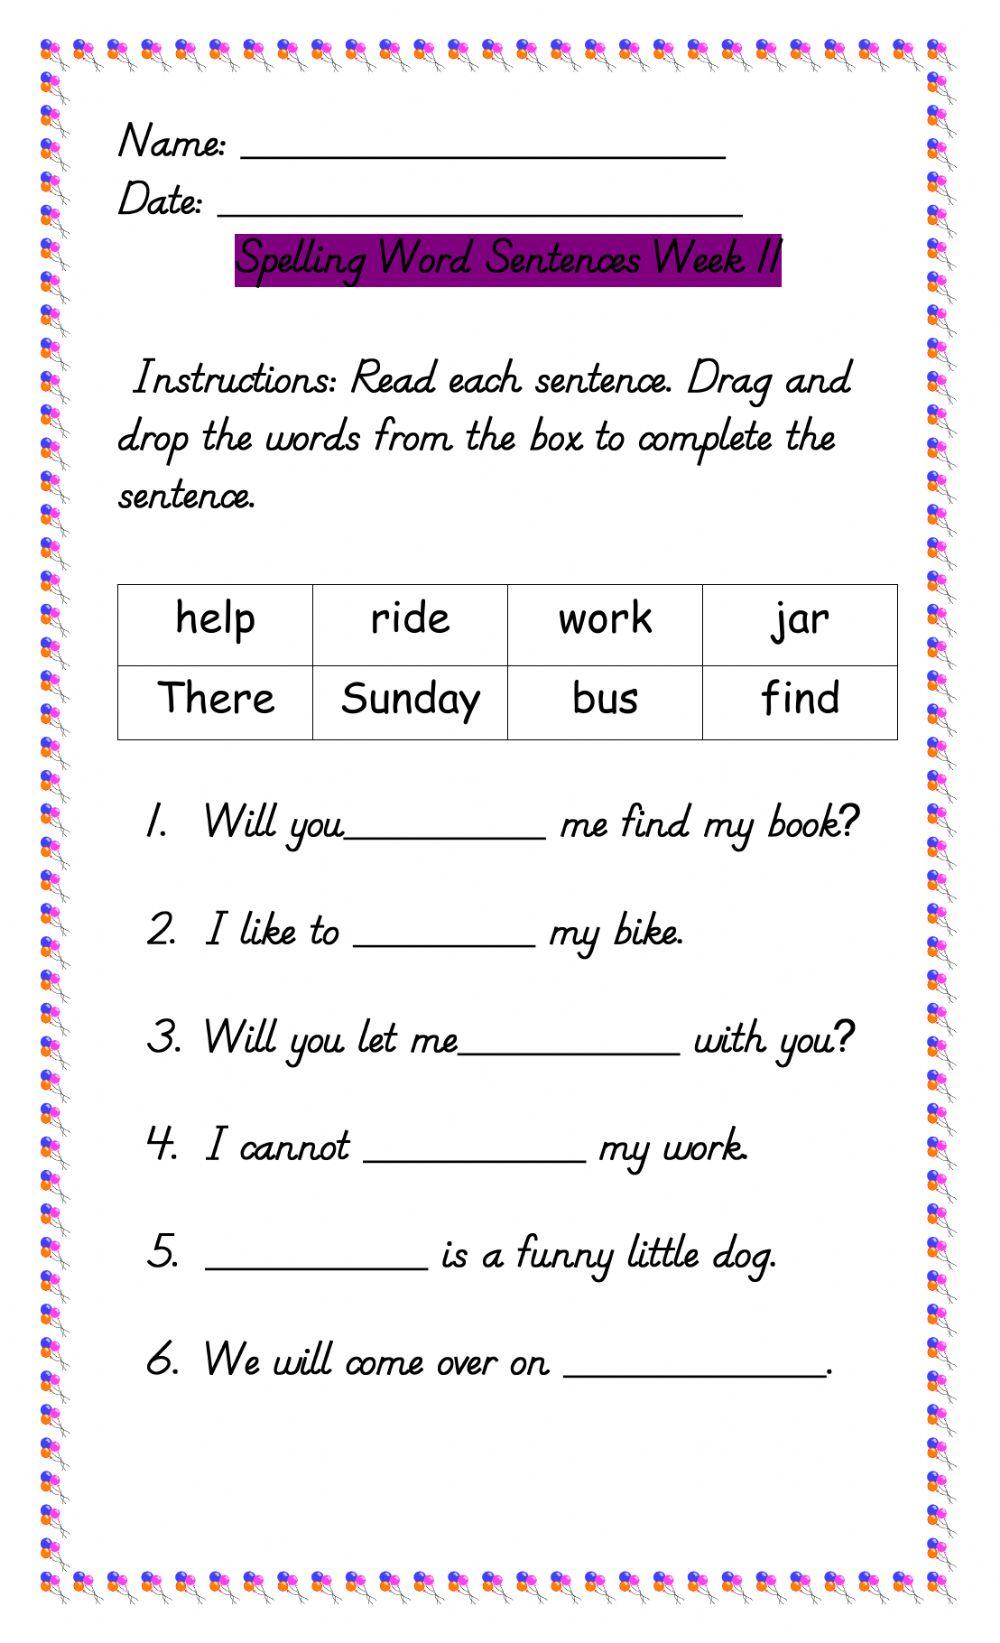 Spelling word sentences